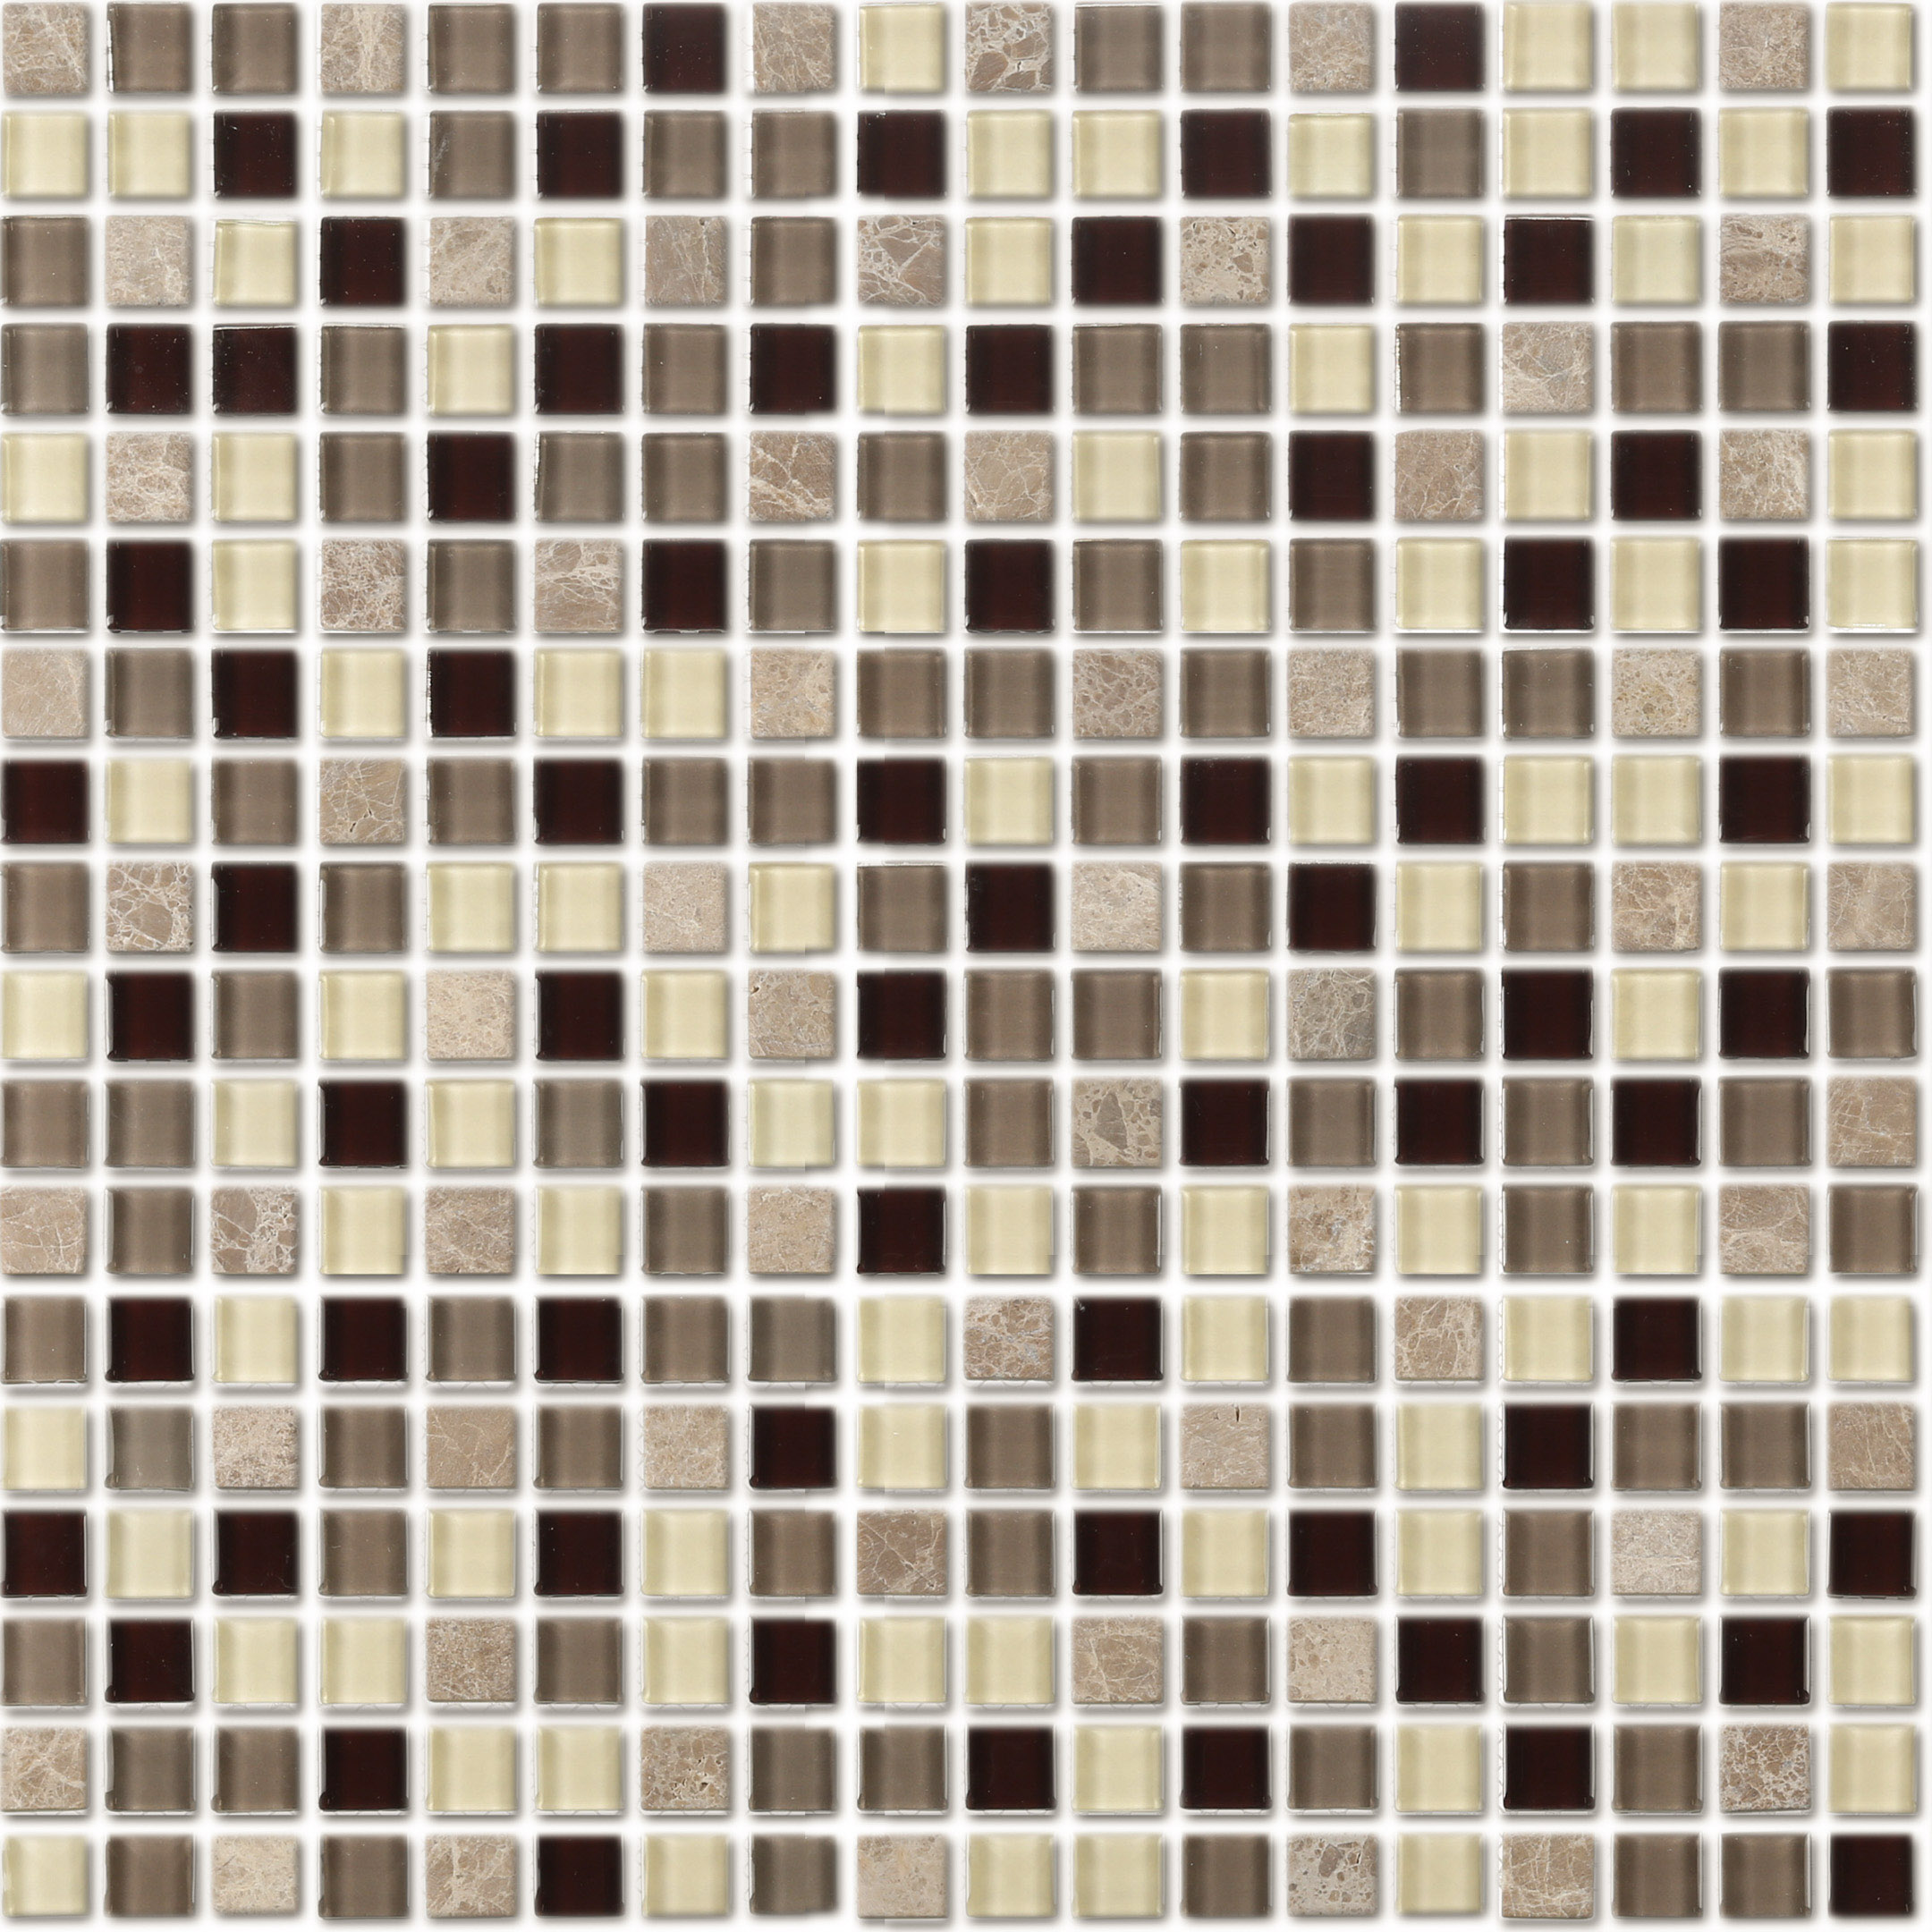 Мозаика Lavelly Elements Vanilla Brown Mix ванильно-коричневый микс из стекла и камня 305х305х8 мм